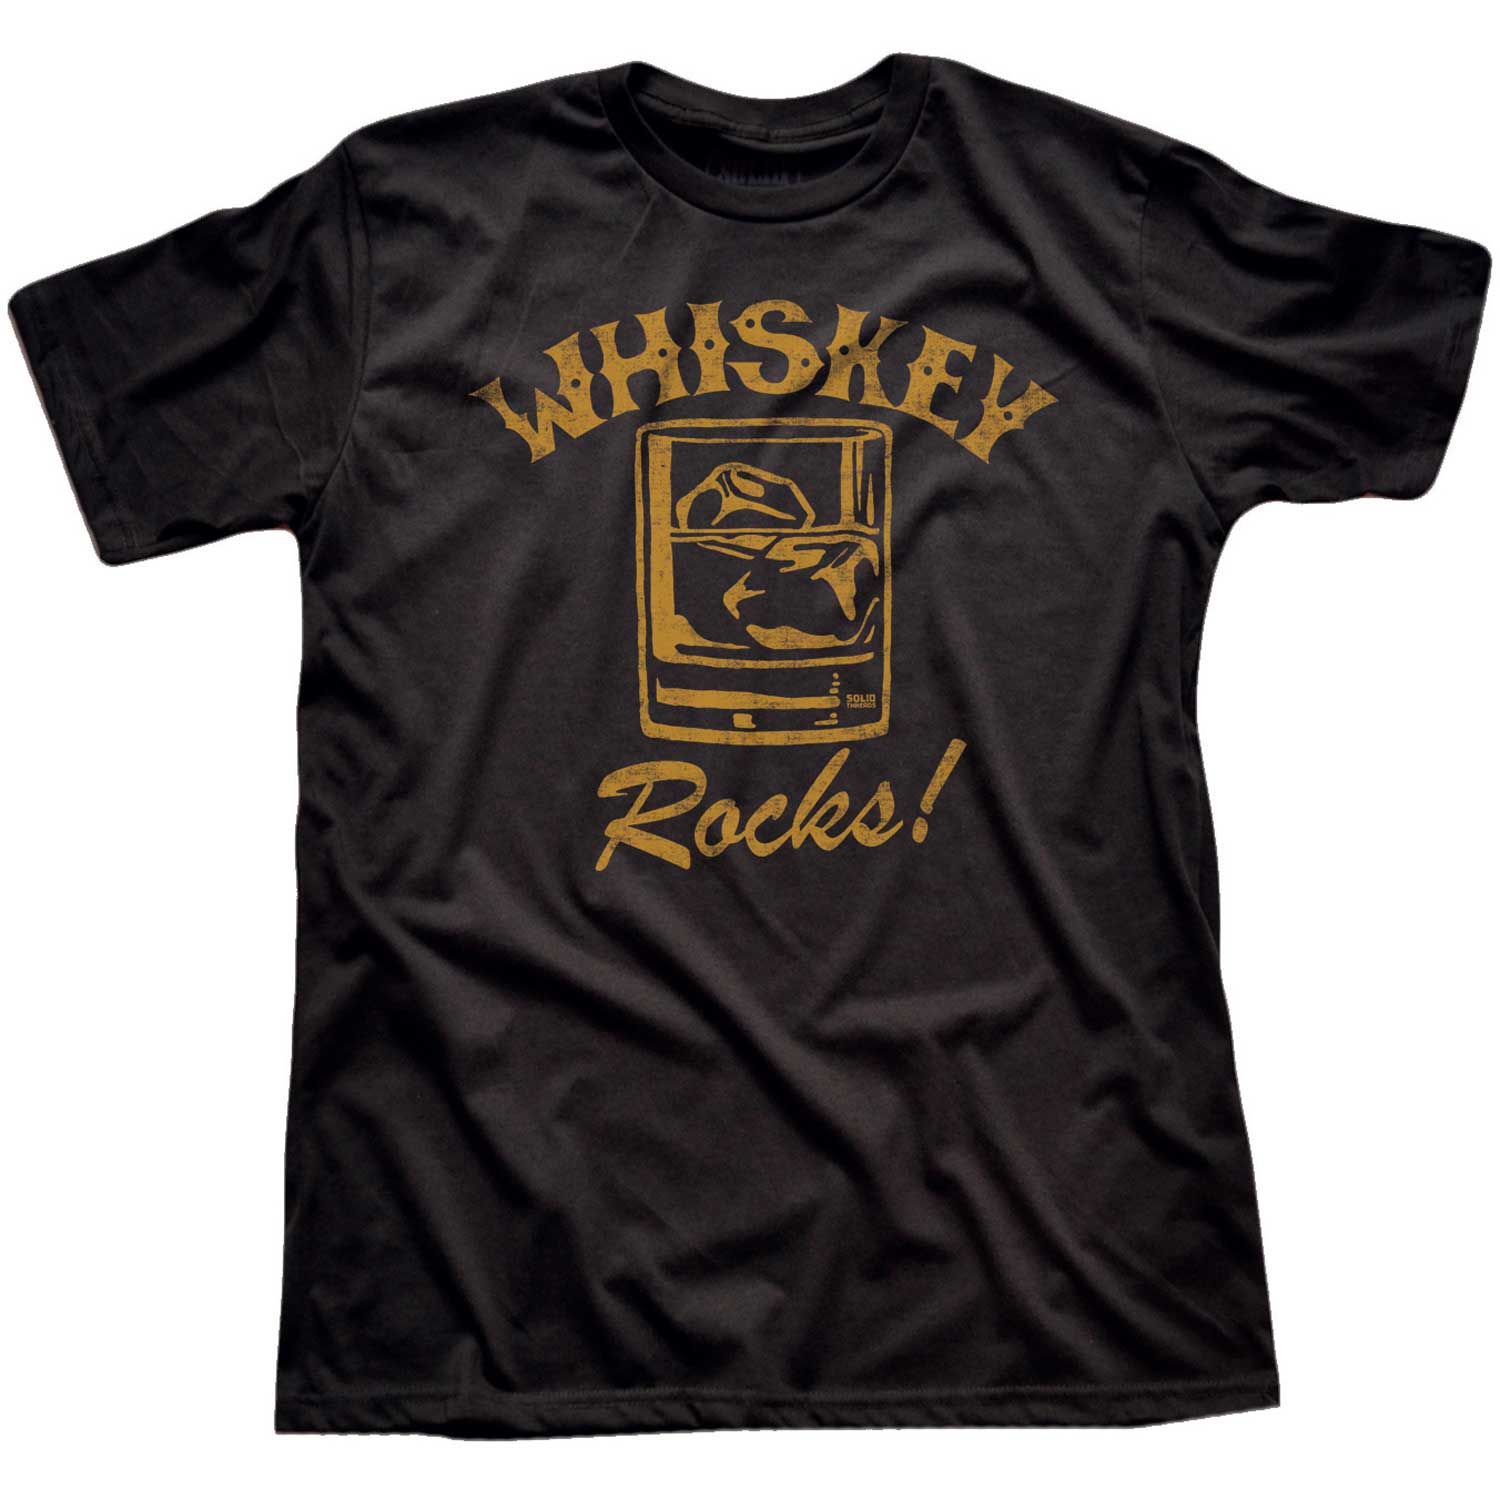 Whiskey Rocks T-shirt